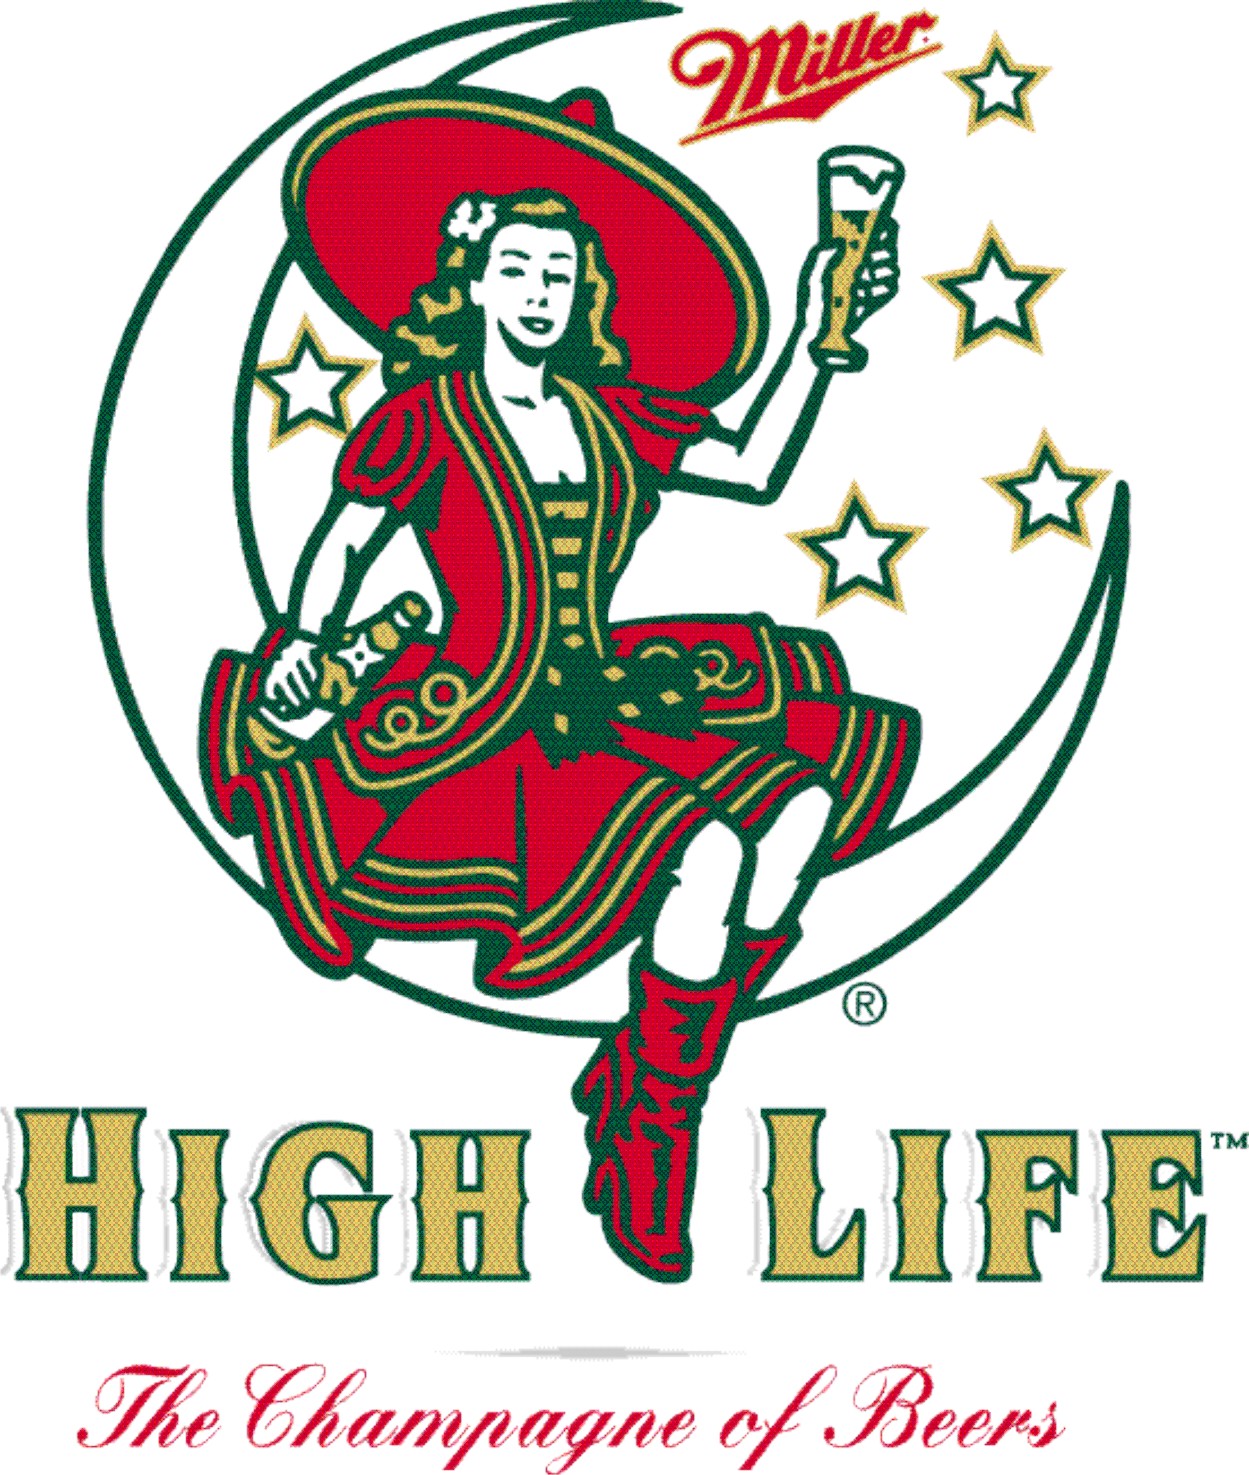 High Life girl on the moon siren logo